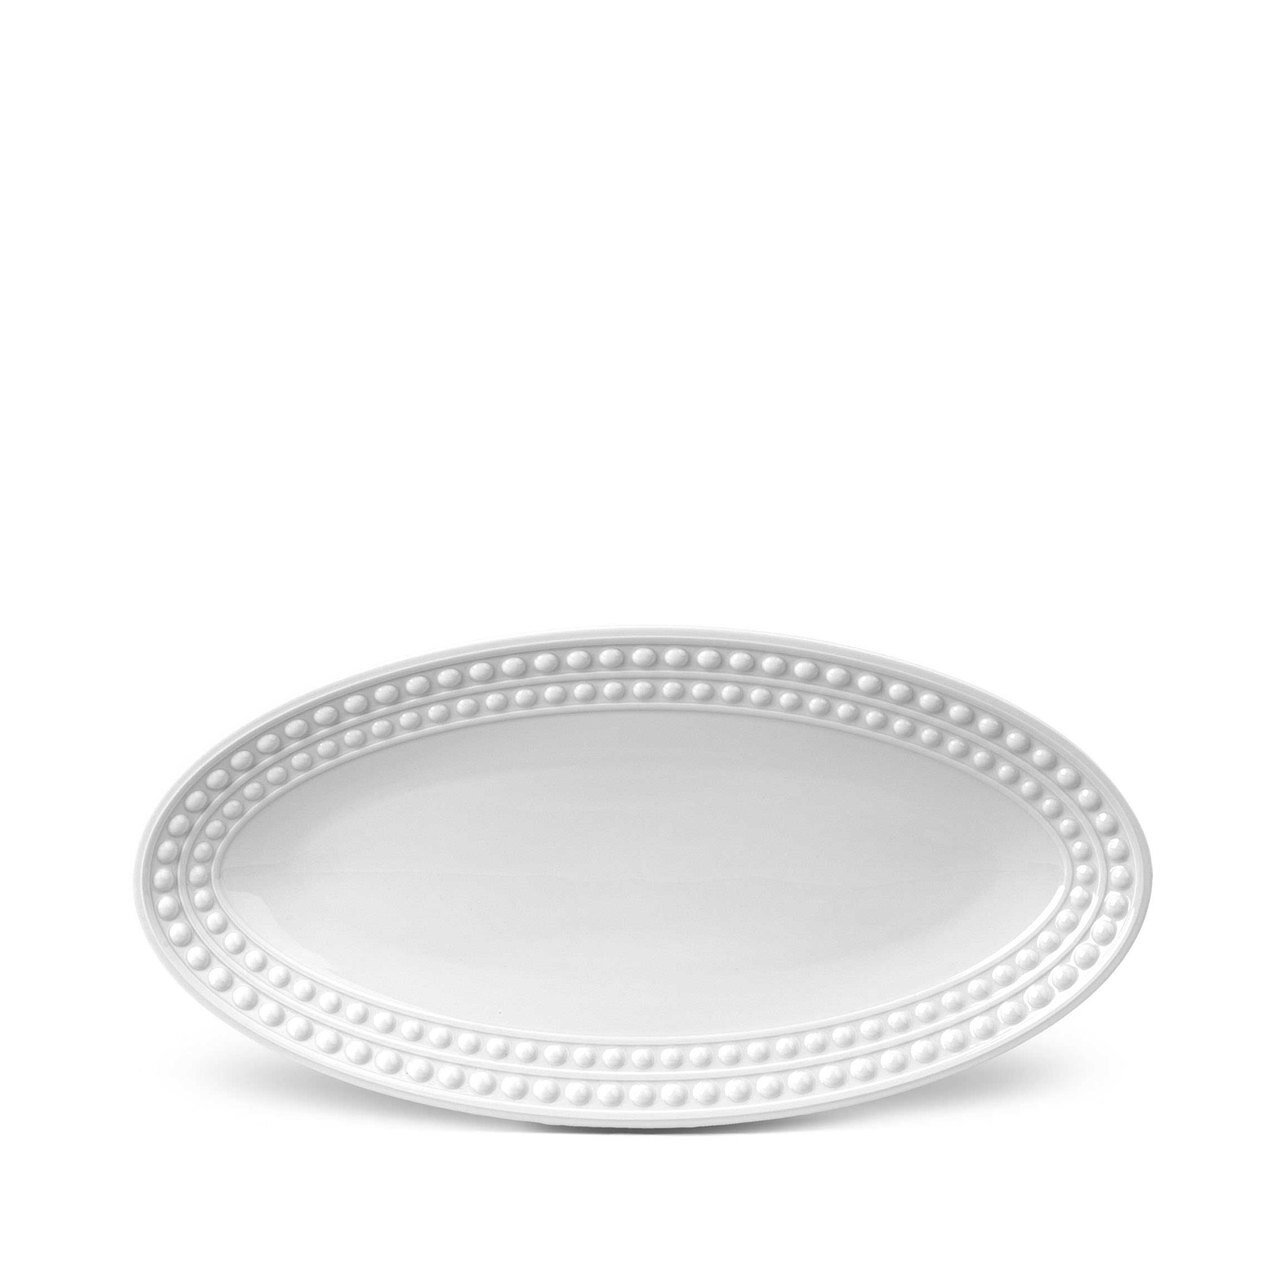 L'Objet Perlee Small Oval Platter White